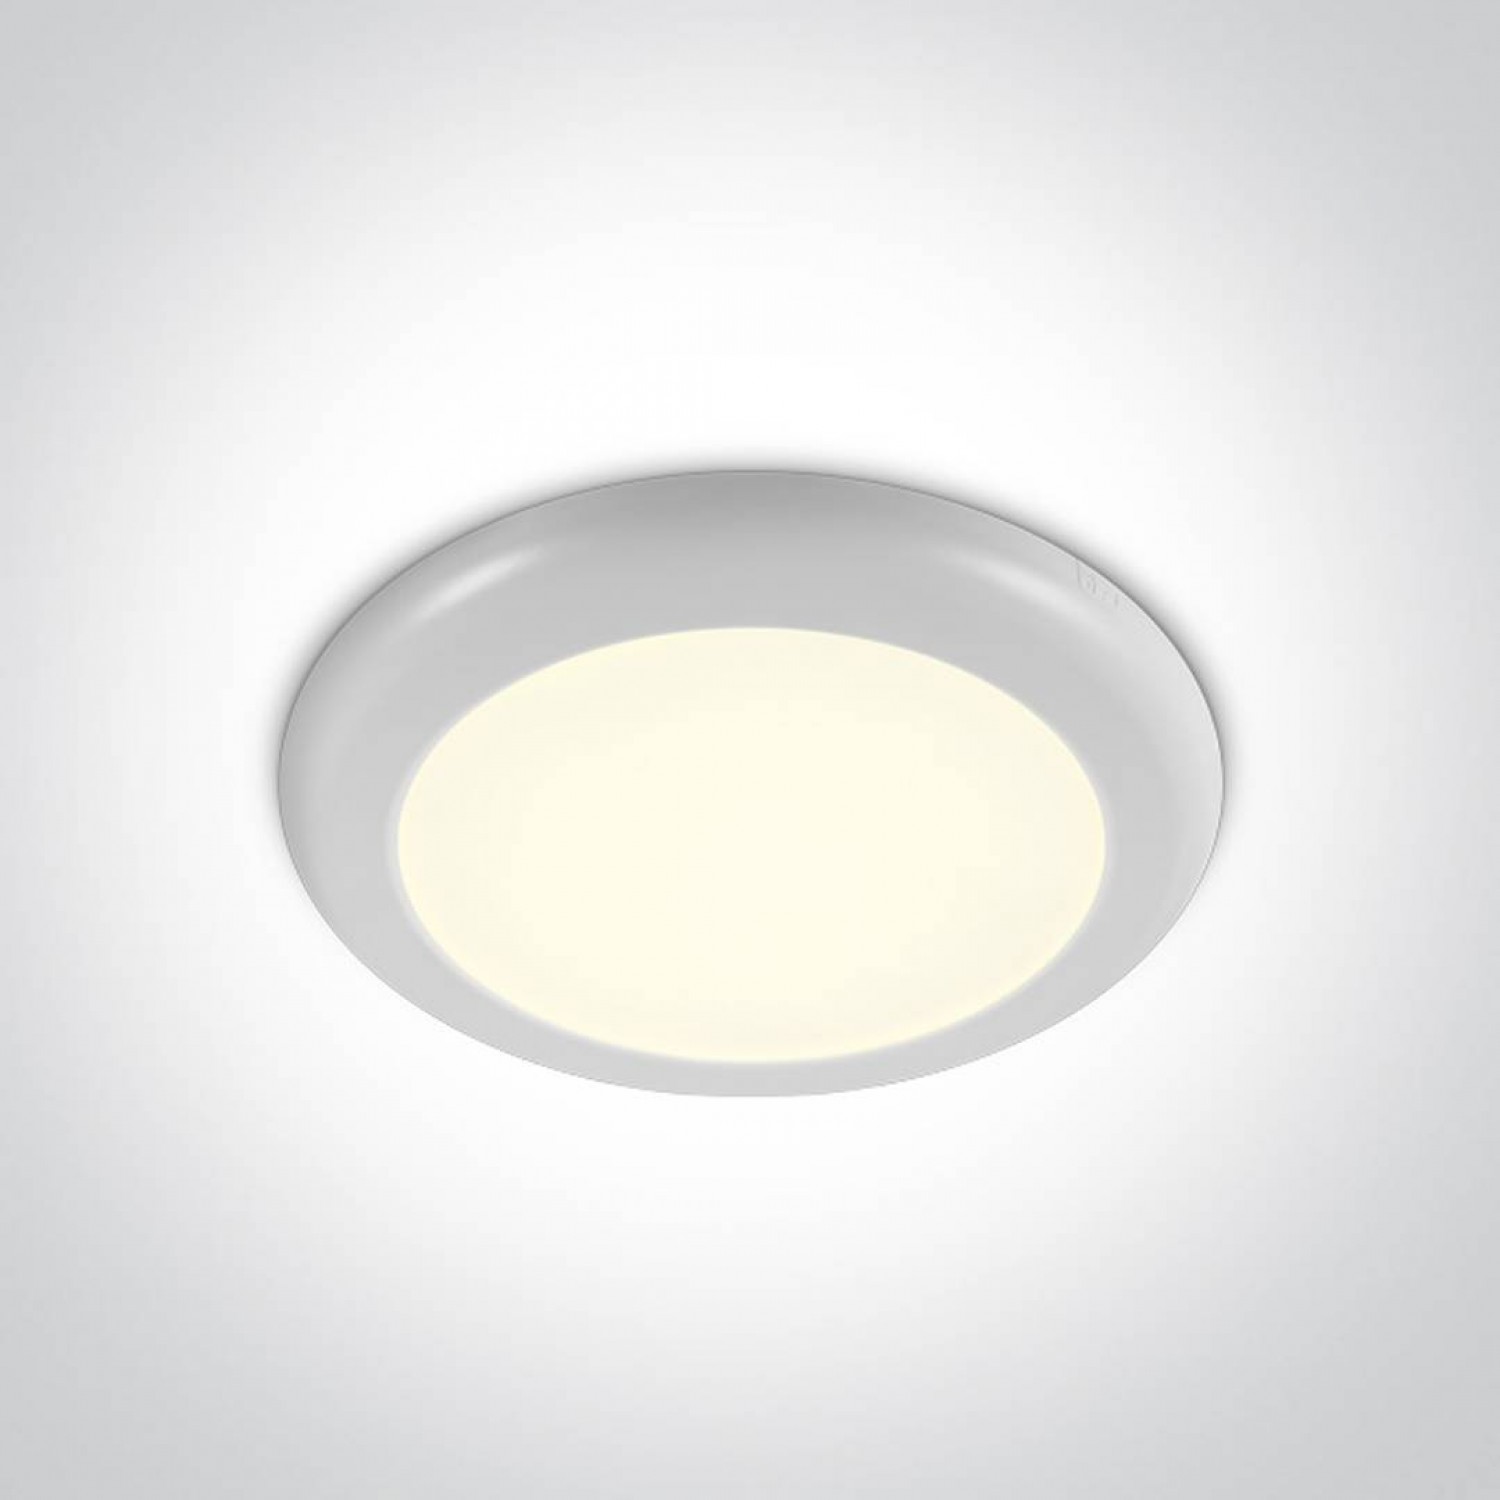 alt_image Точечный светильник ONE Light Surface/Recessed Panels Adjustable Cut Out Hole 62116F/W/W